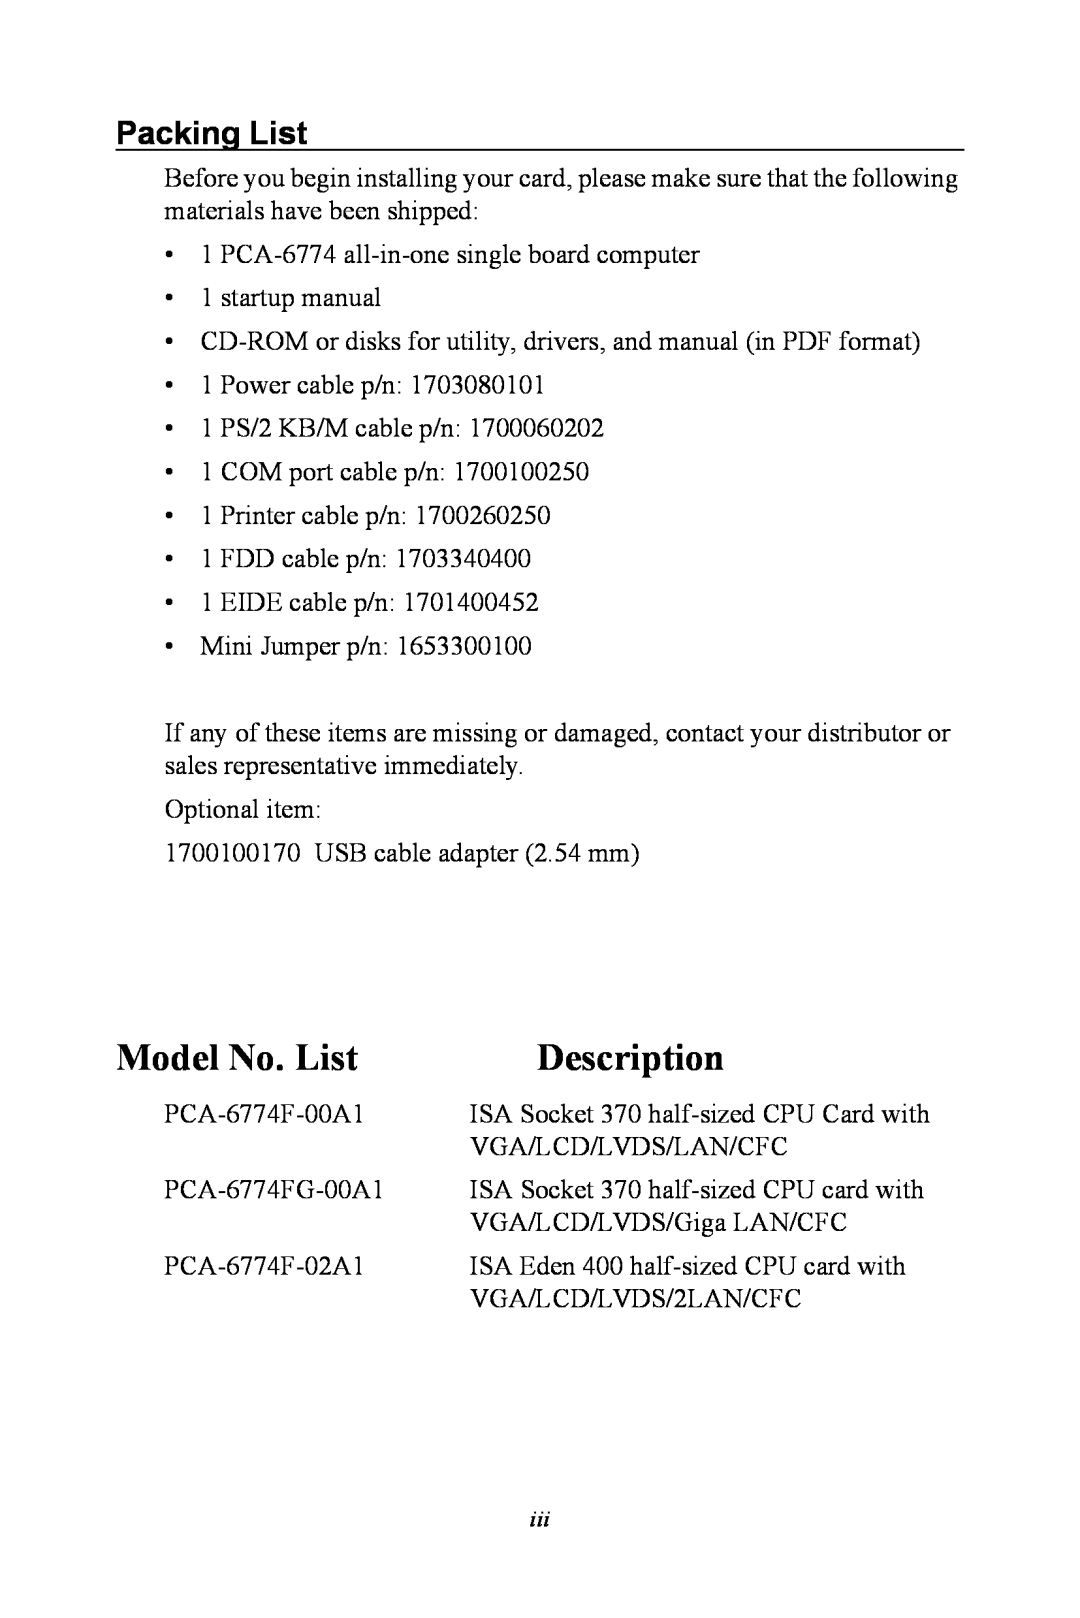 Advantech PCA-6774 user manual Packing List, Model No. List, Description 